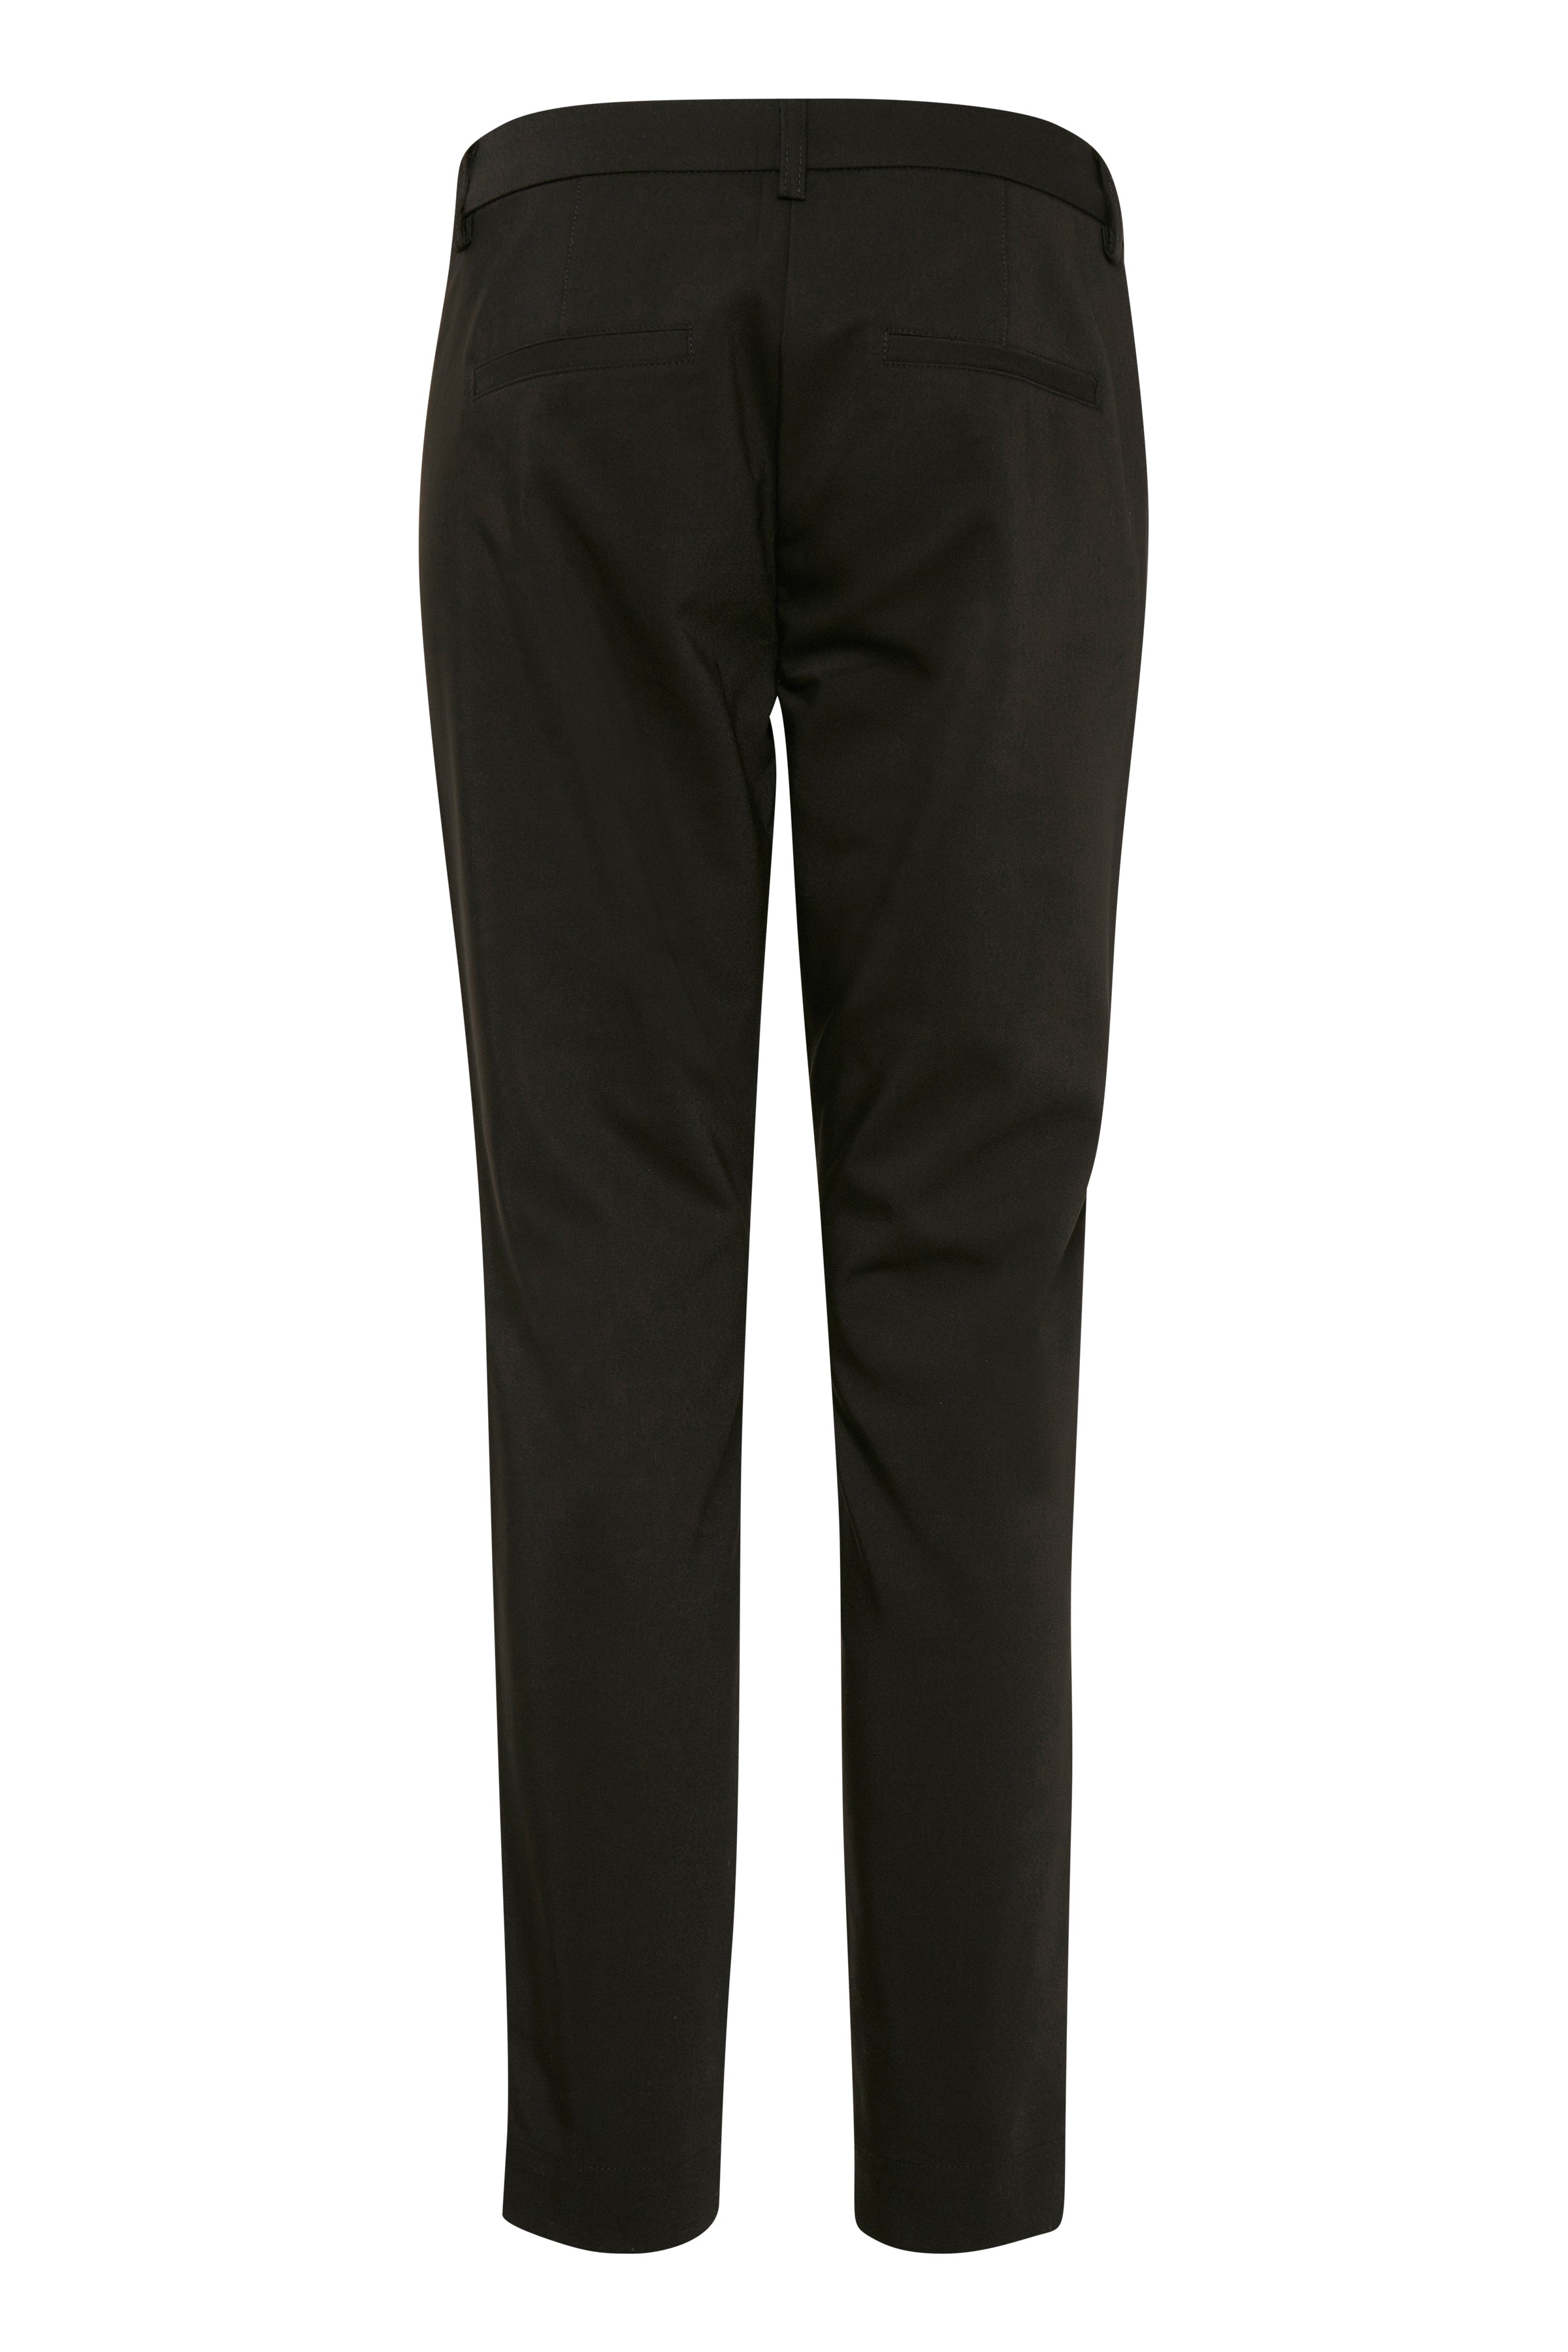 Fransa Zapant Black – 20603400 Style Boutique Ruby Cigarette Trousers, 67